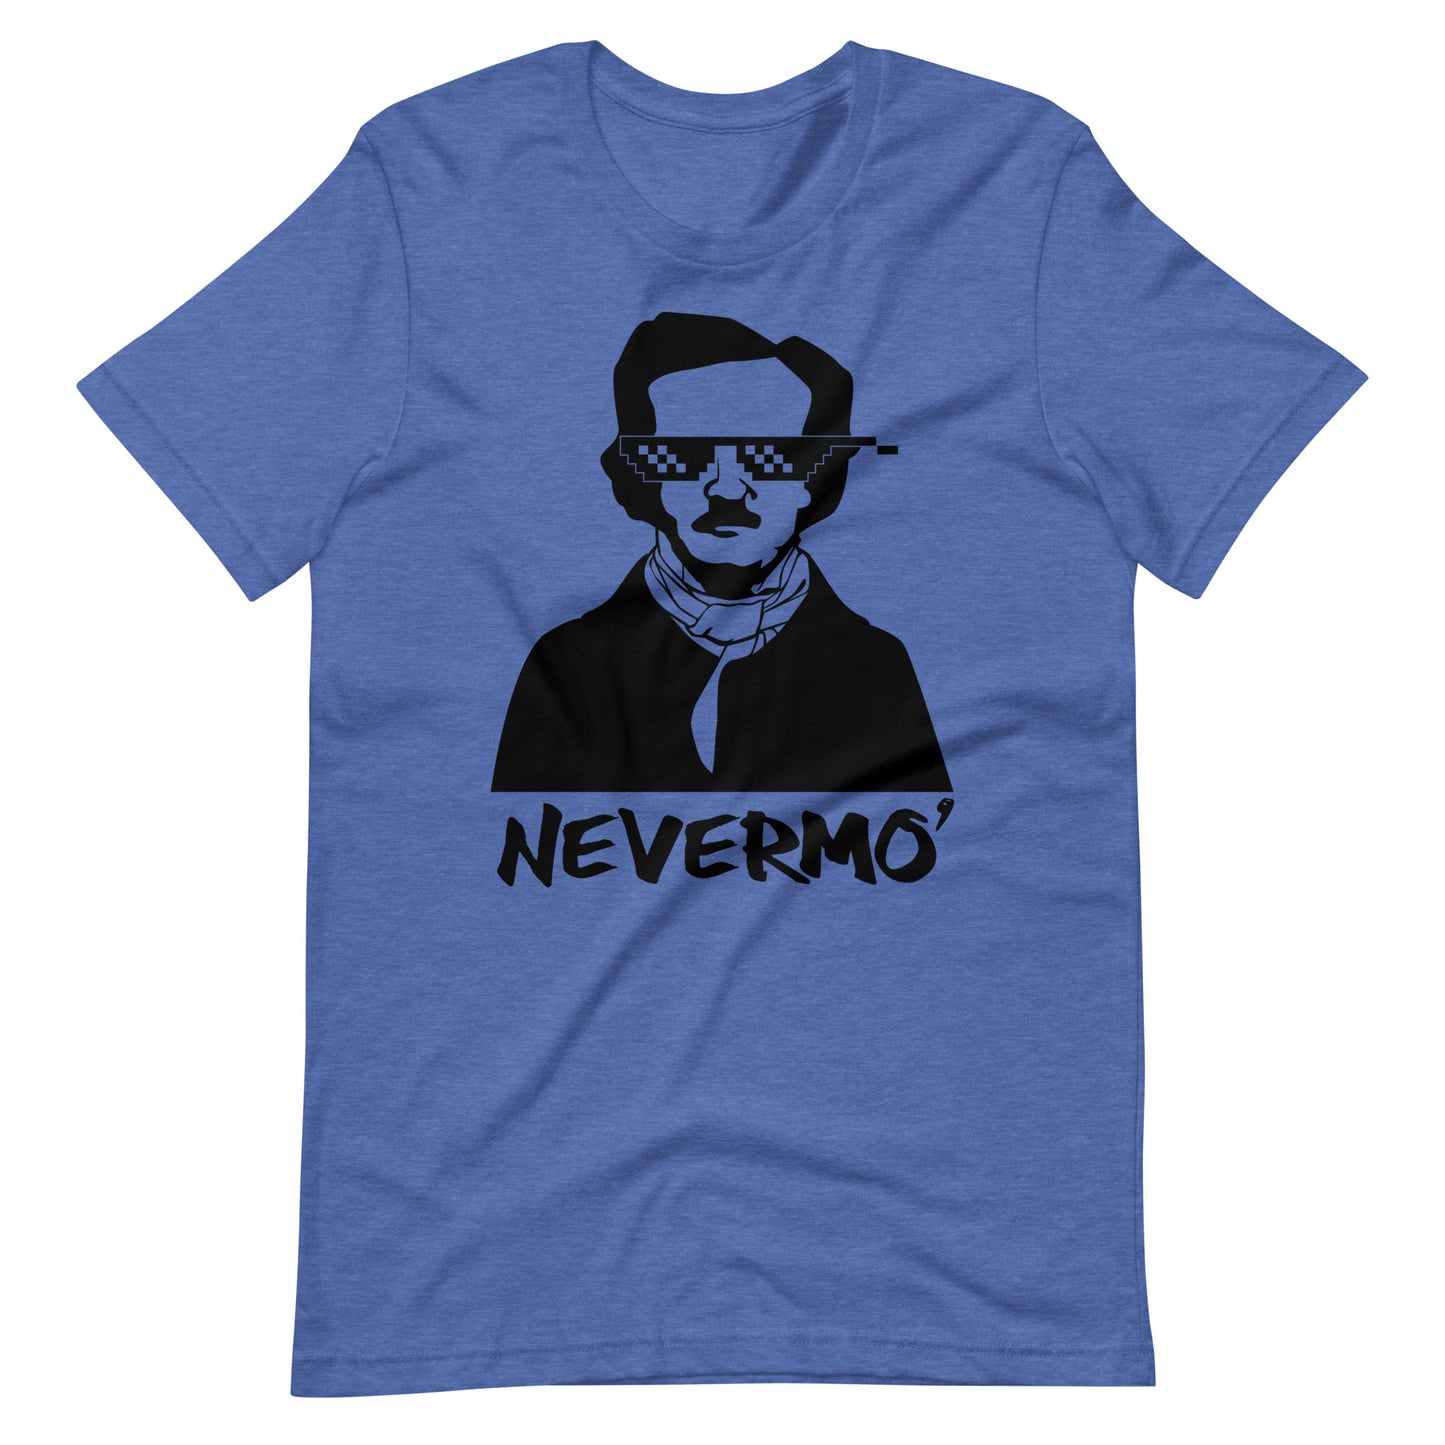 Women's Edgar Allan Poe "Nevermo" t-shirt - Heather True Royal Front